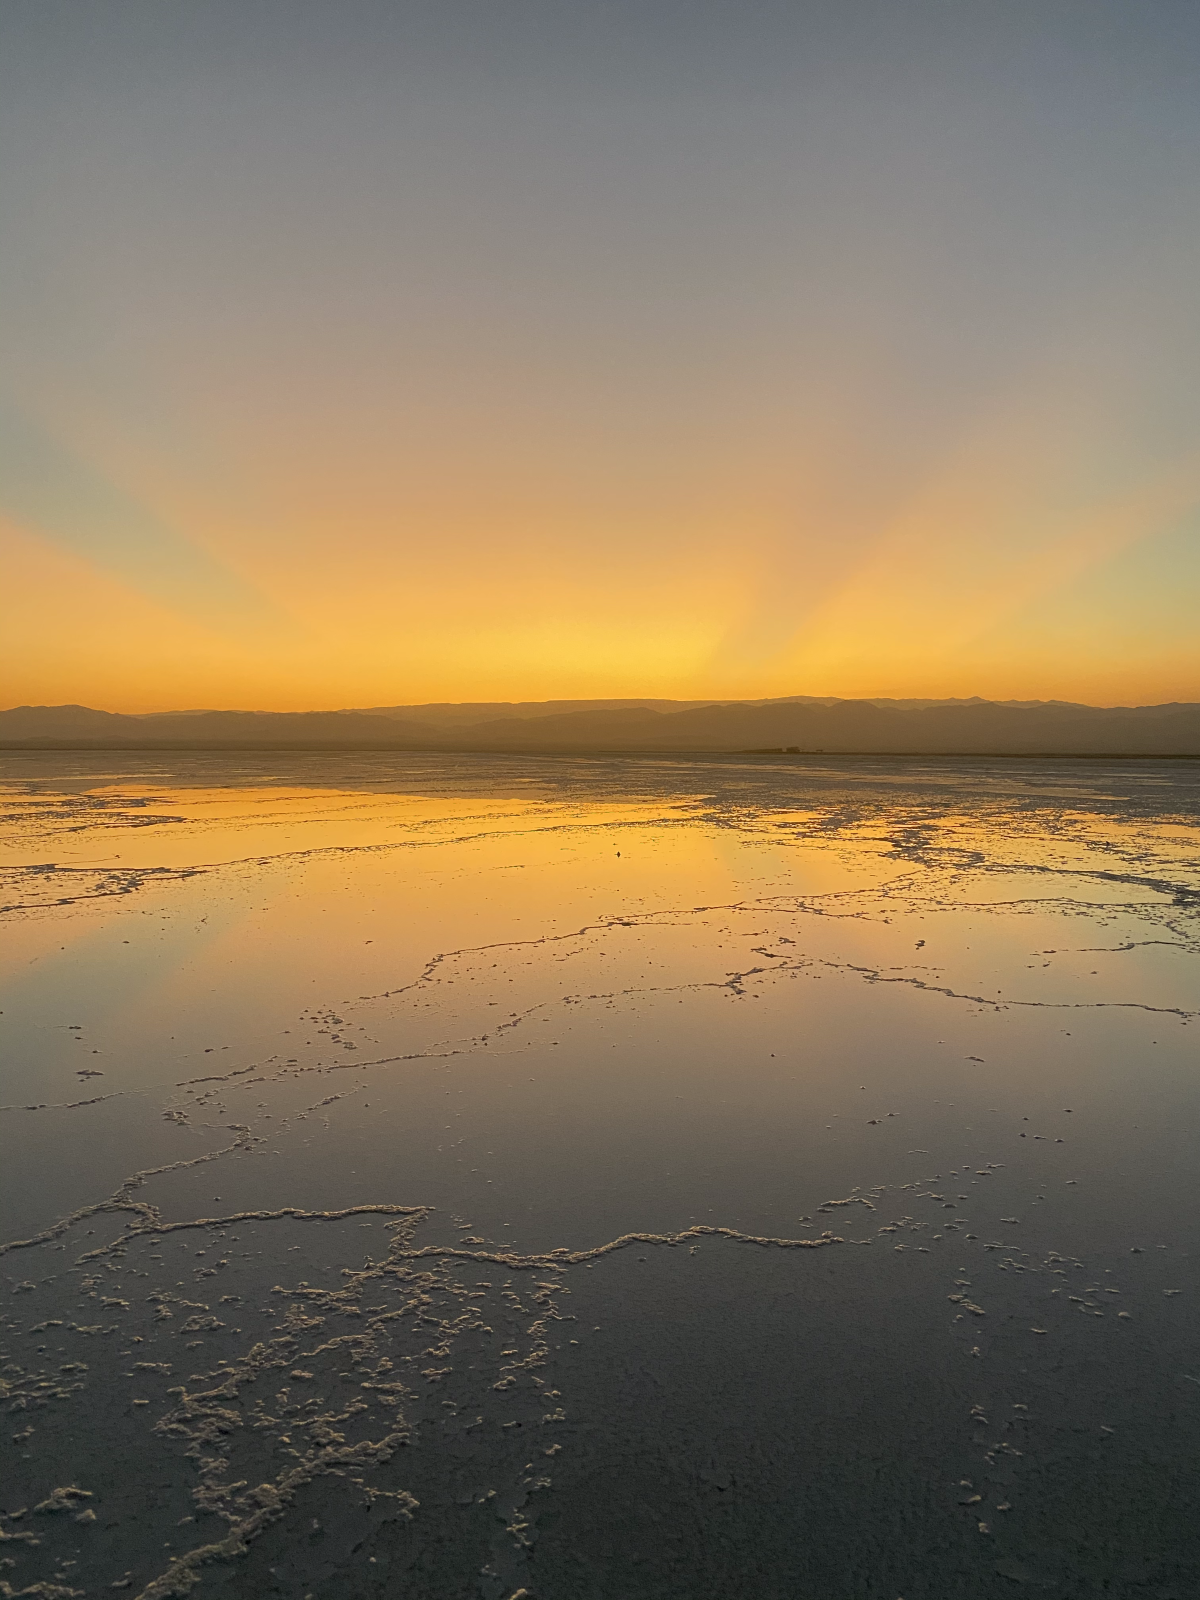 A sunset on the horizon of the salt lake